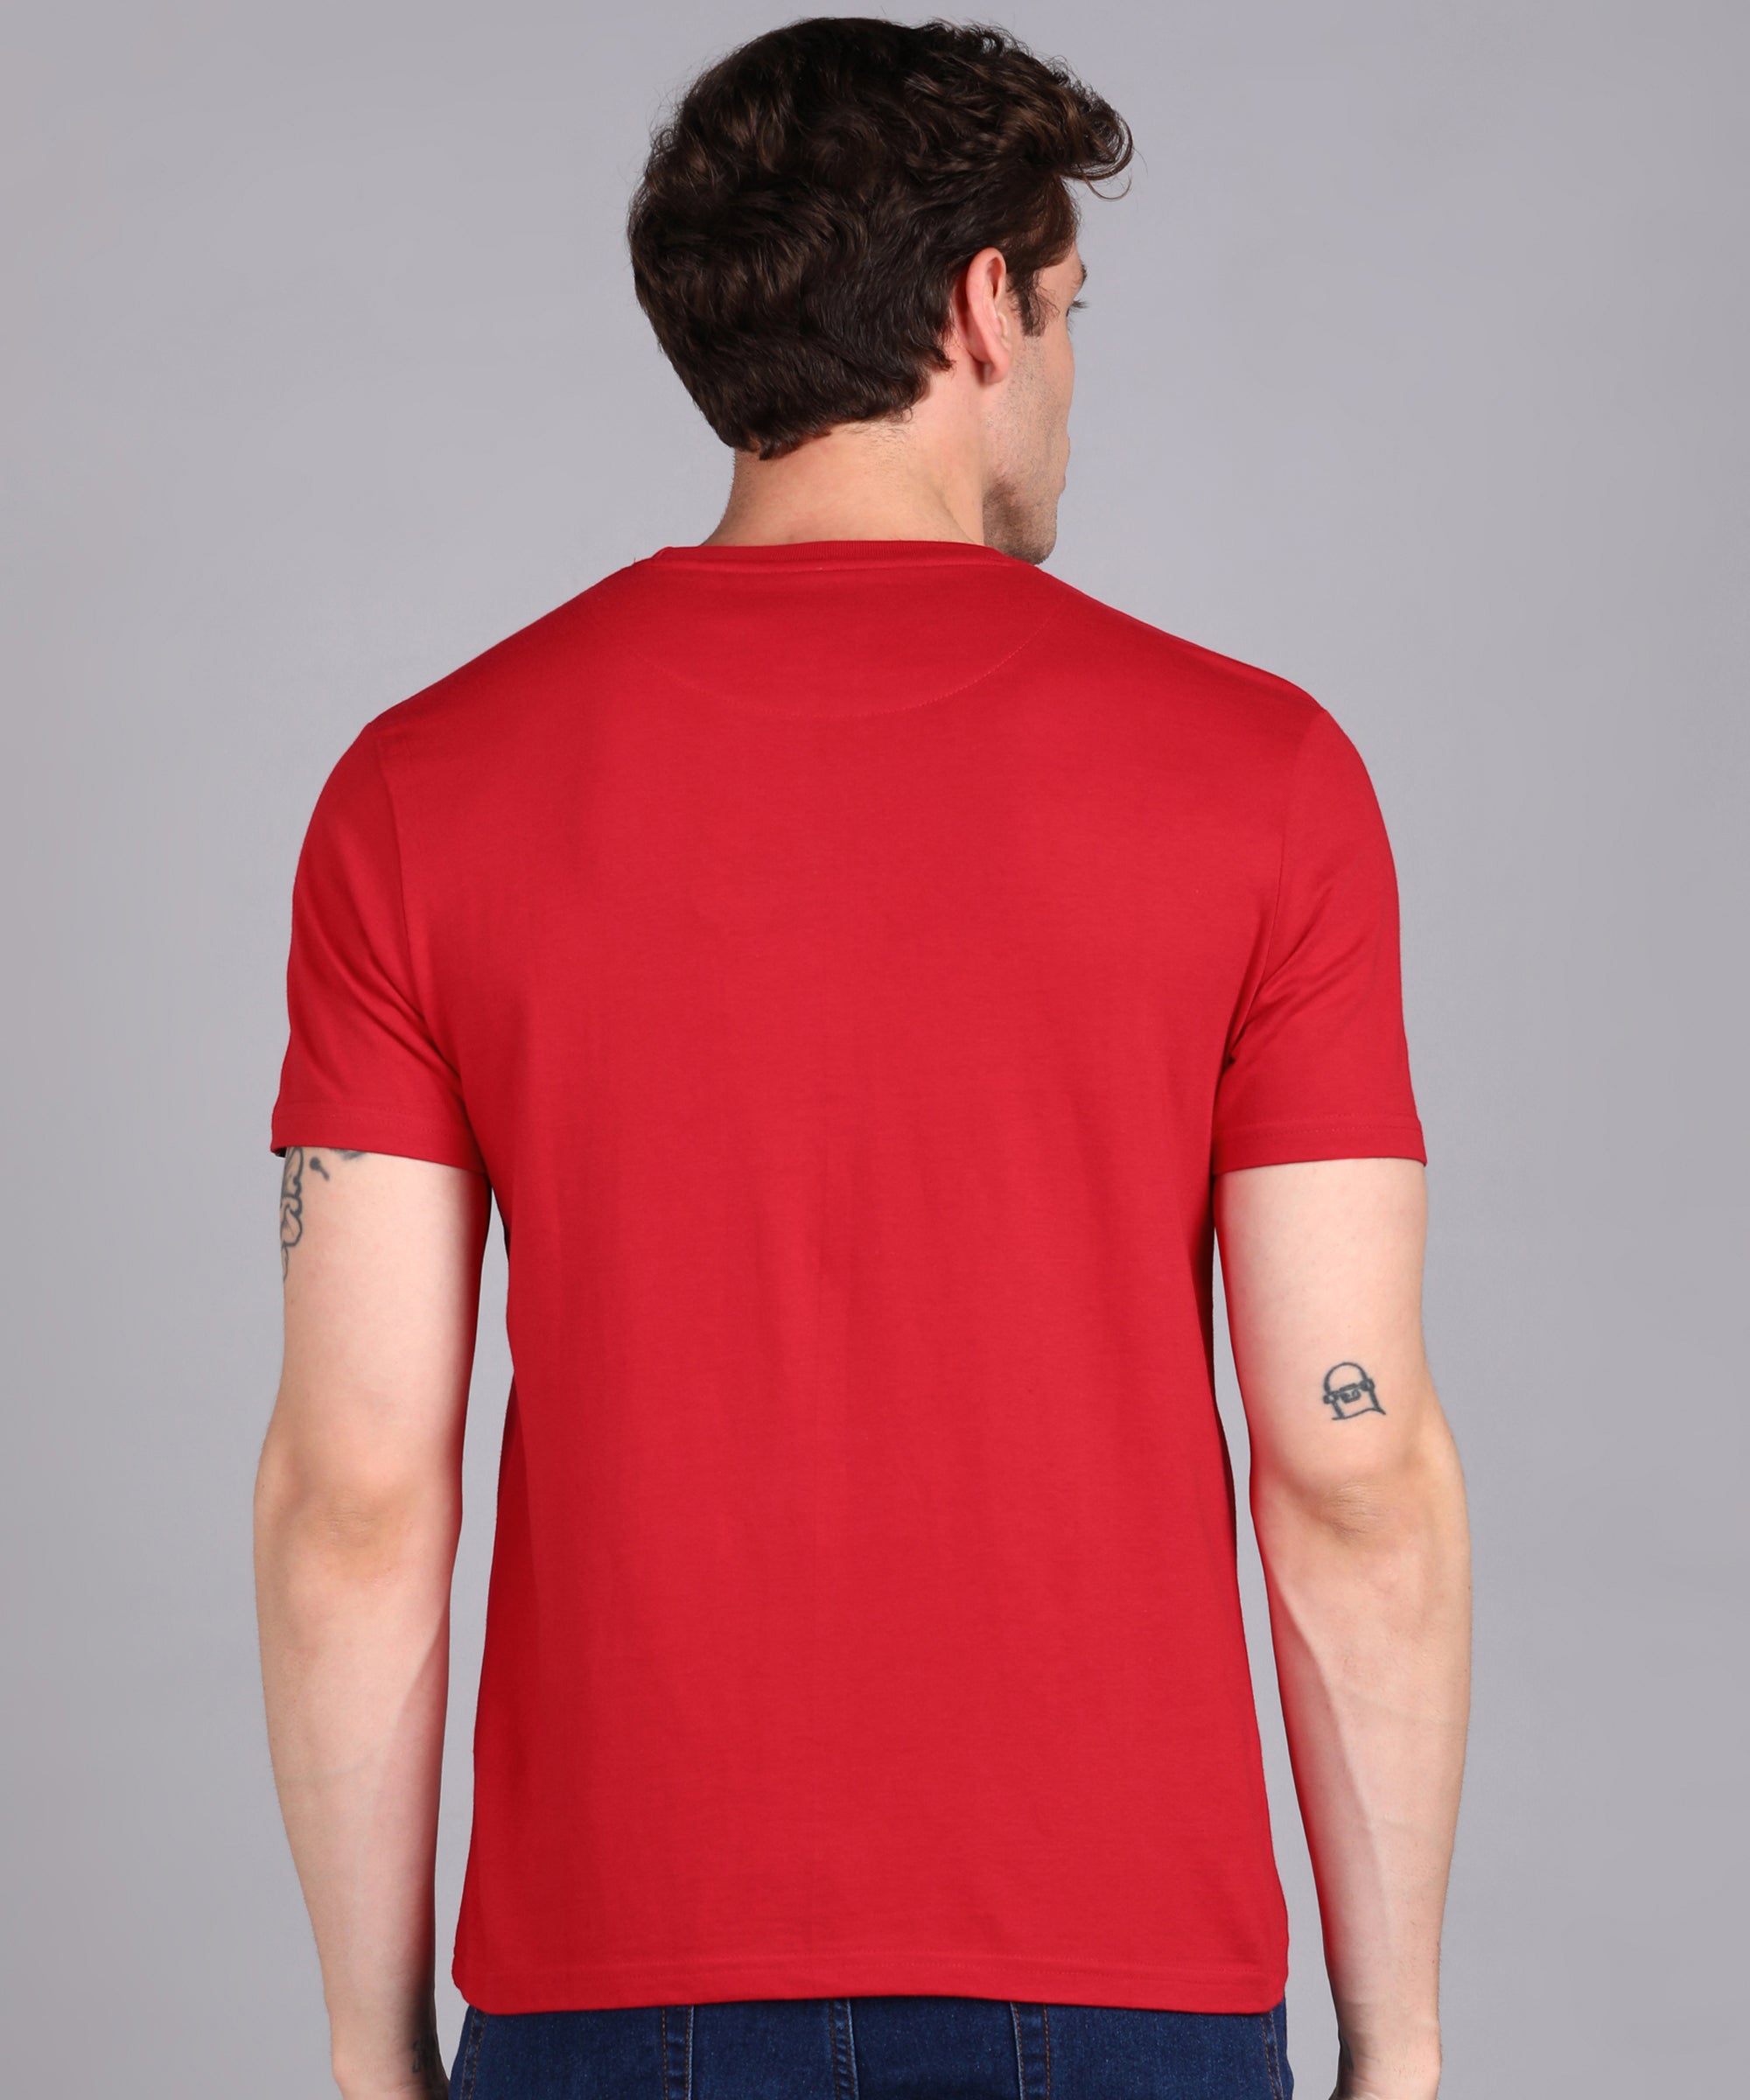 Urbano Fashion Men's Red Graphic Printed Round Neck Half Sleeve Slim Fit Cotton T-Shirt